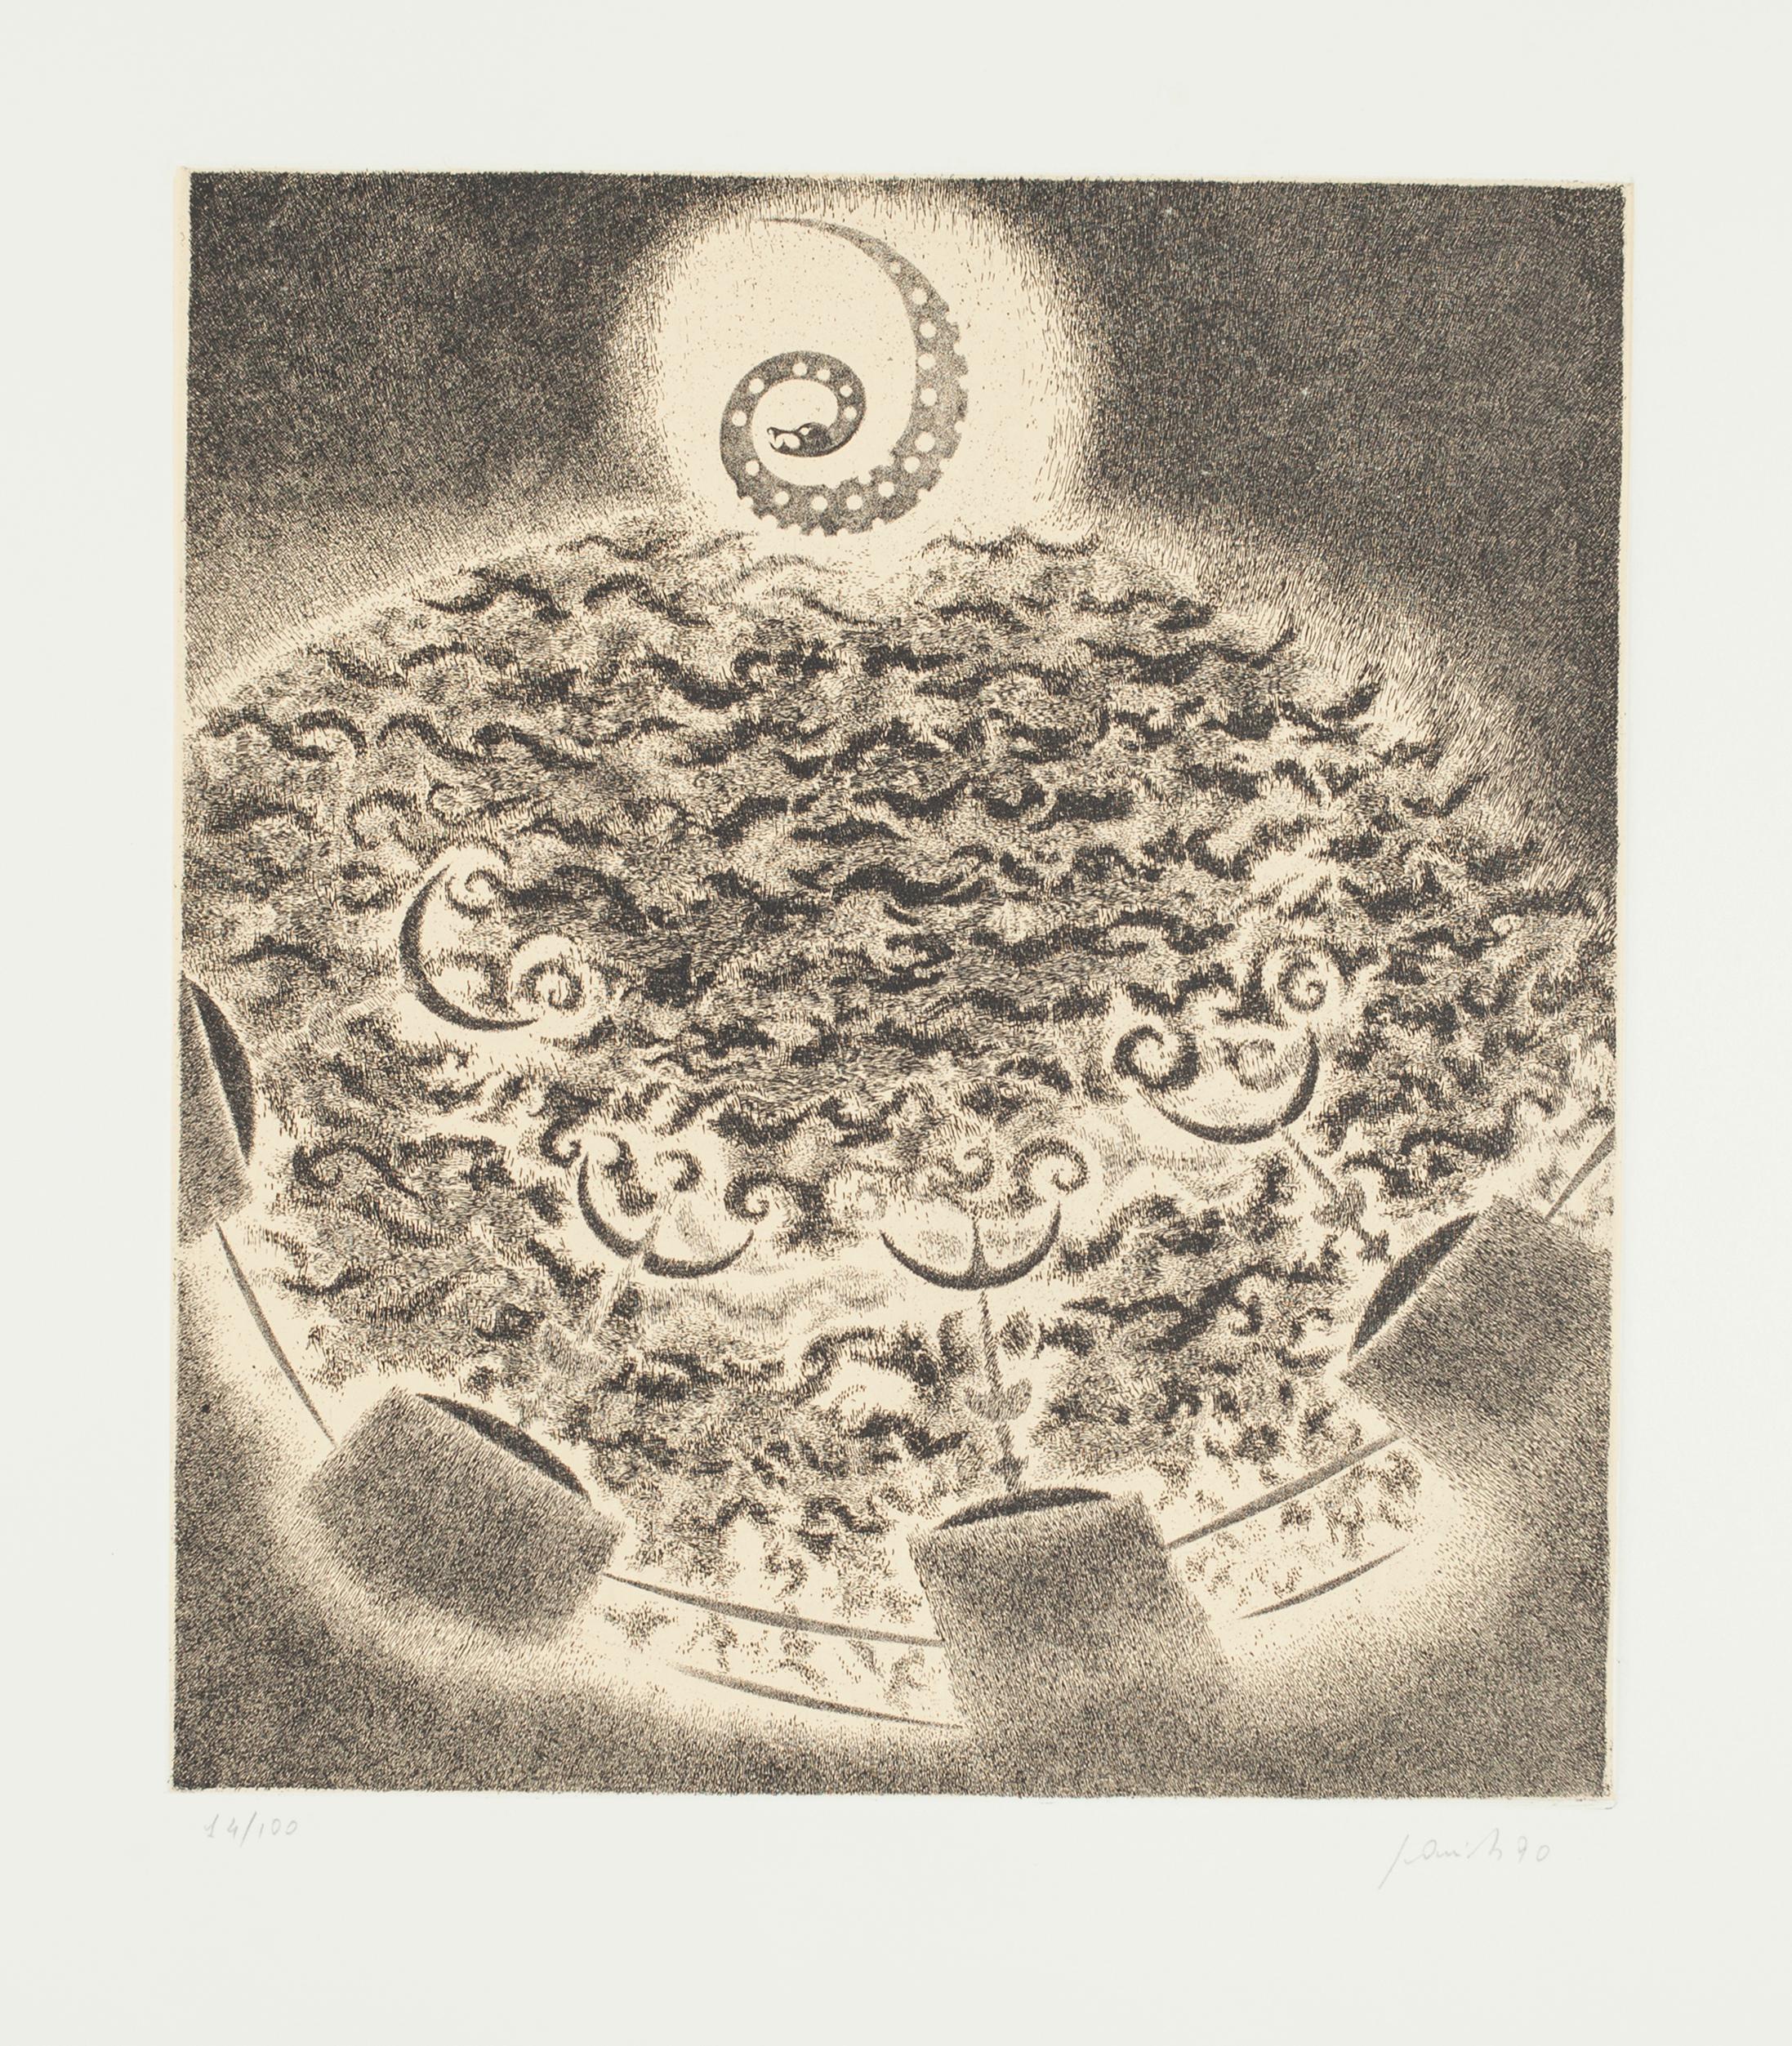 Spiral - Original Etching by Edo Janich - 1970s